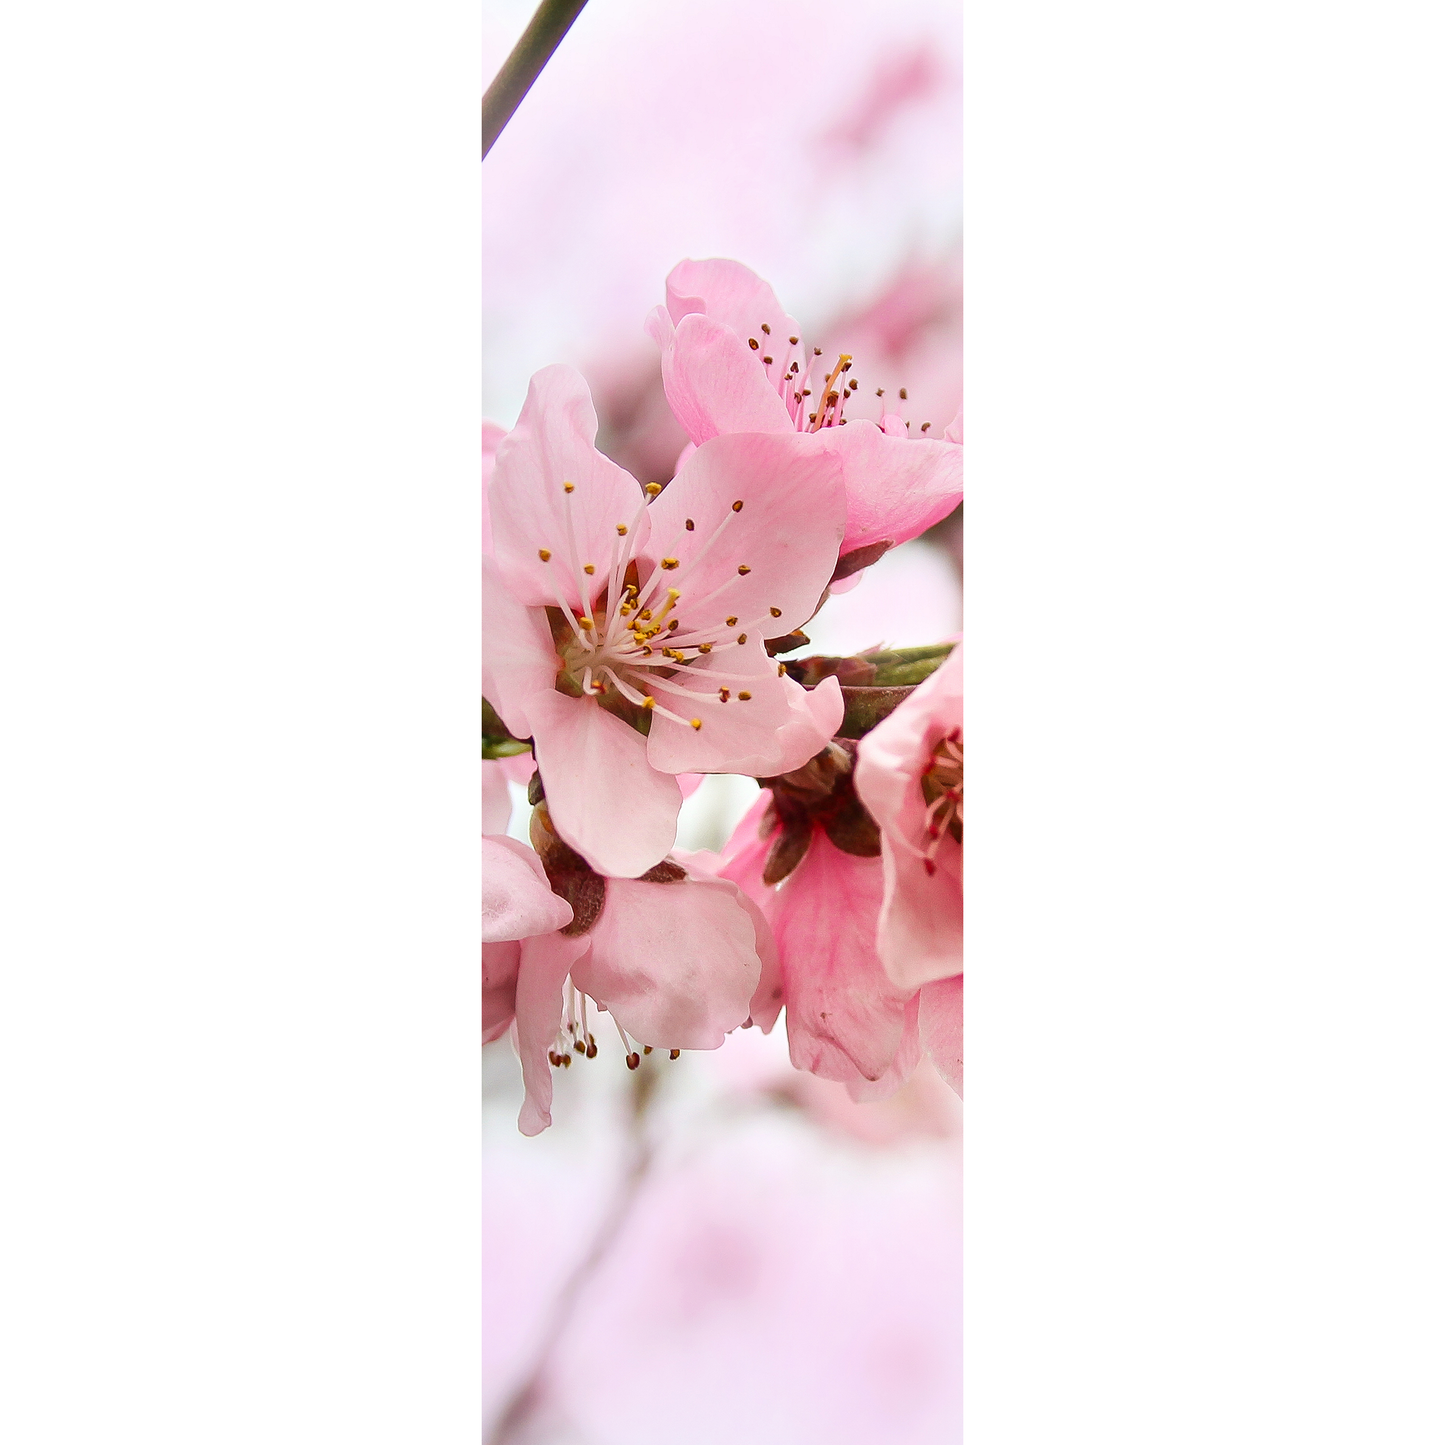 Cherry Tree Flowers